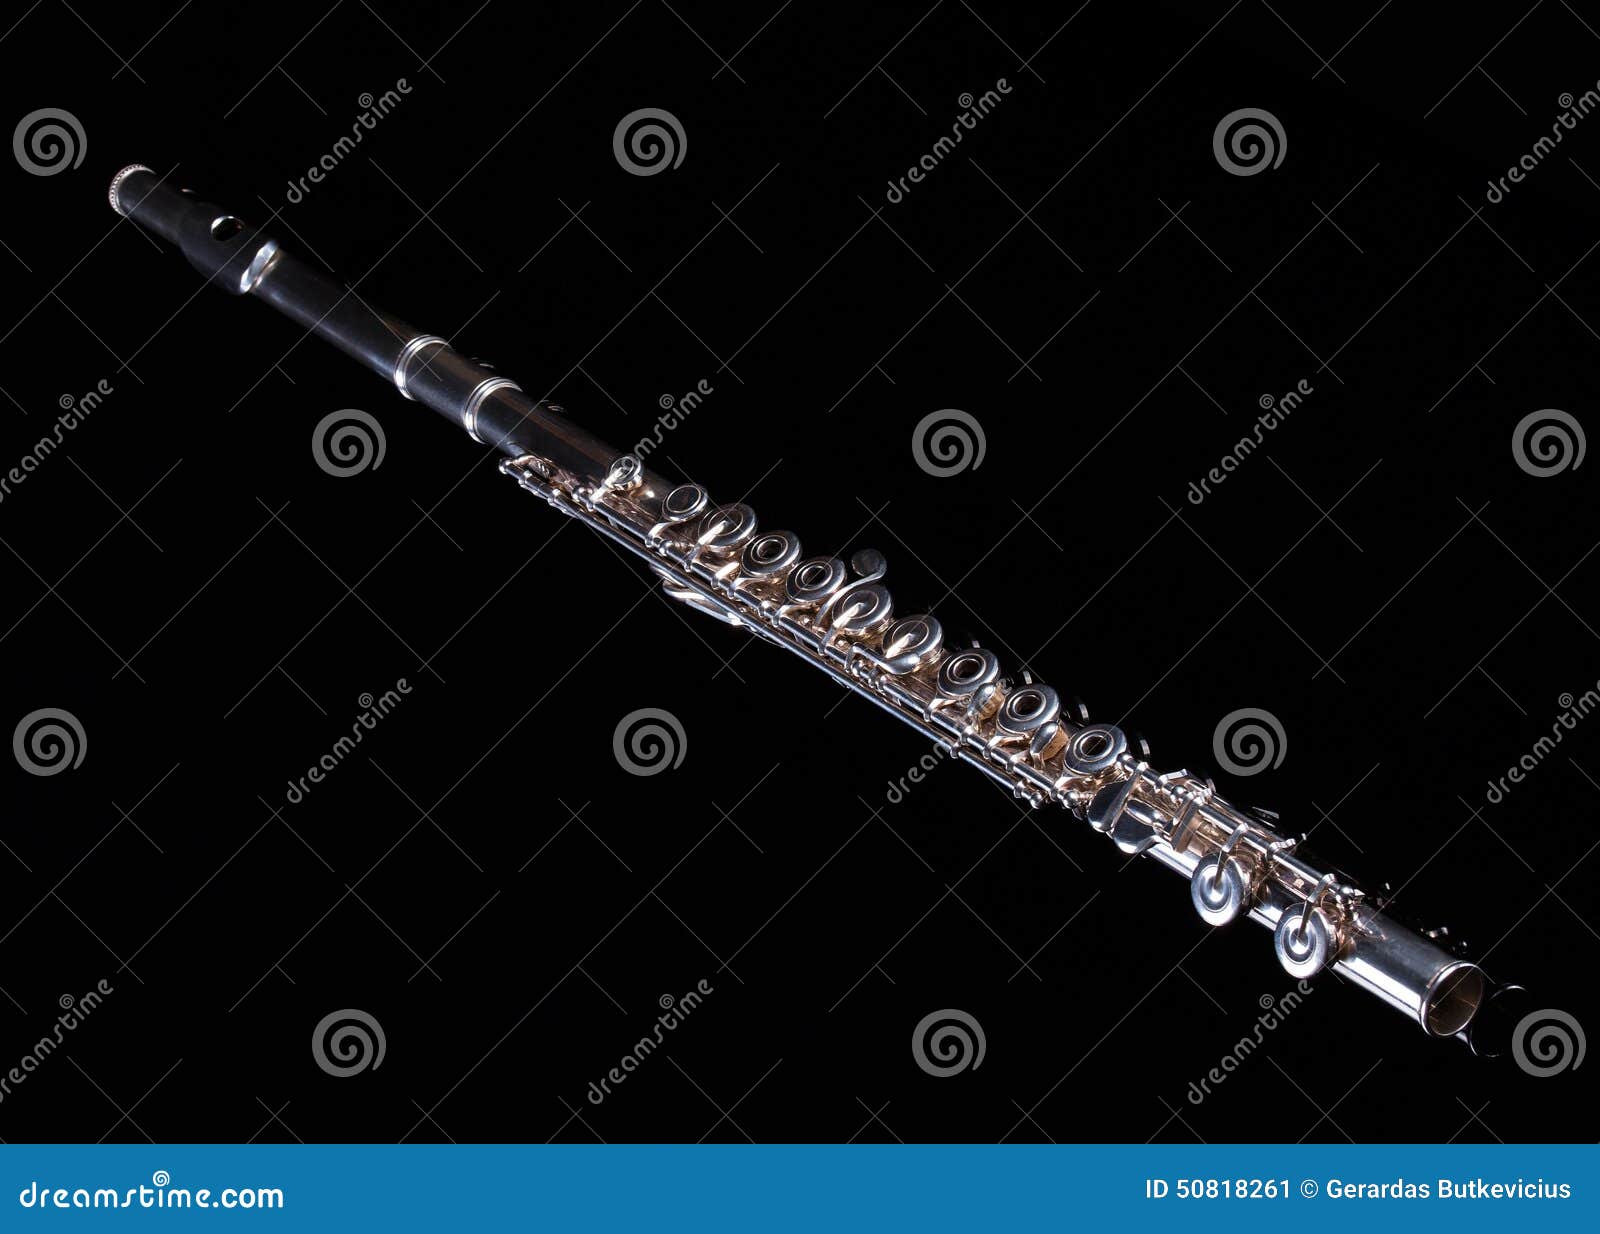 Flute on black background stock image. Image of listening - 50818261